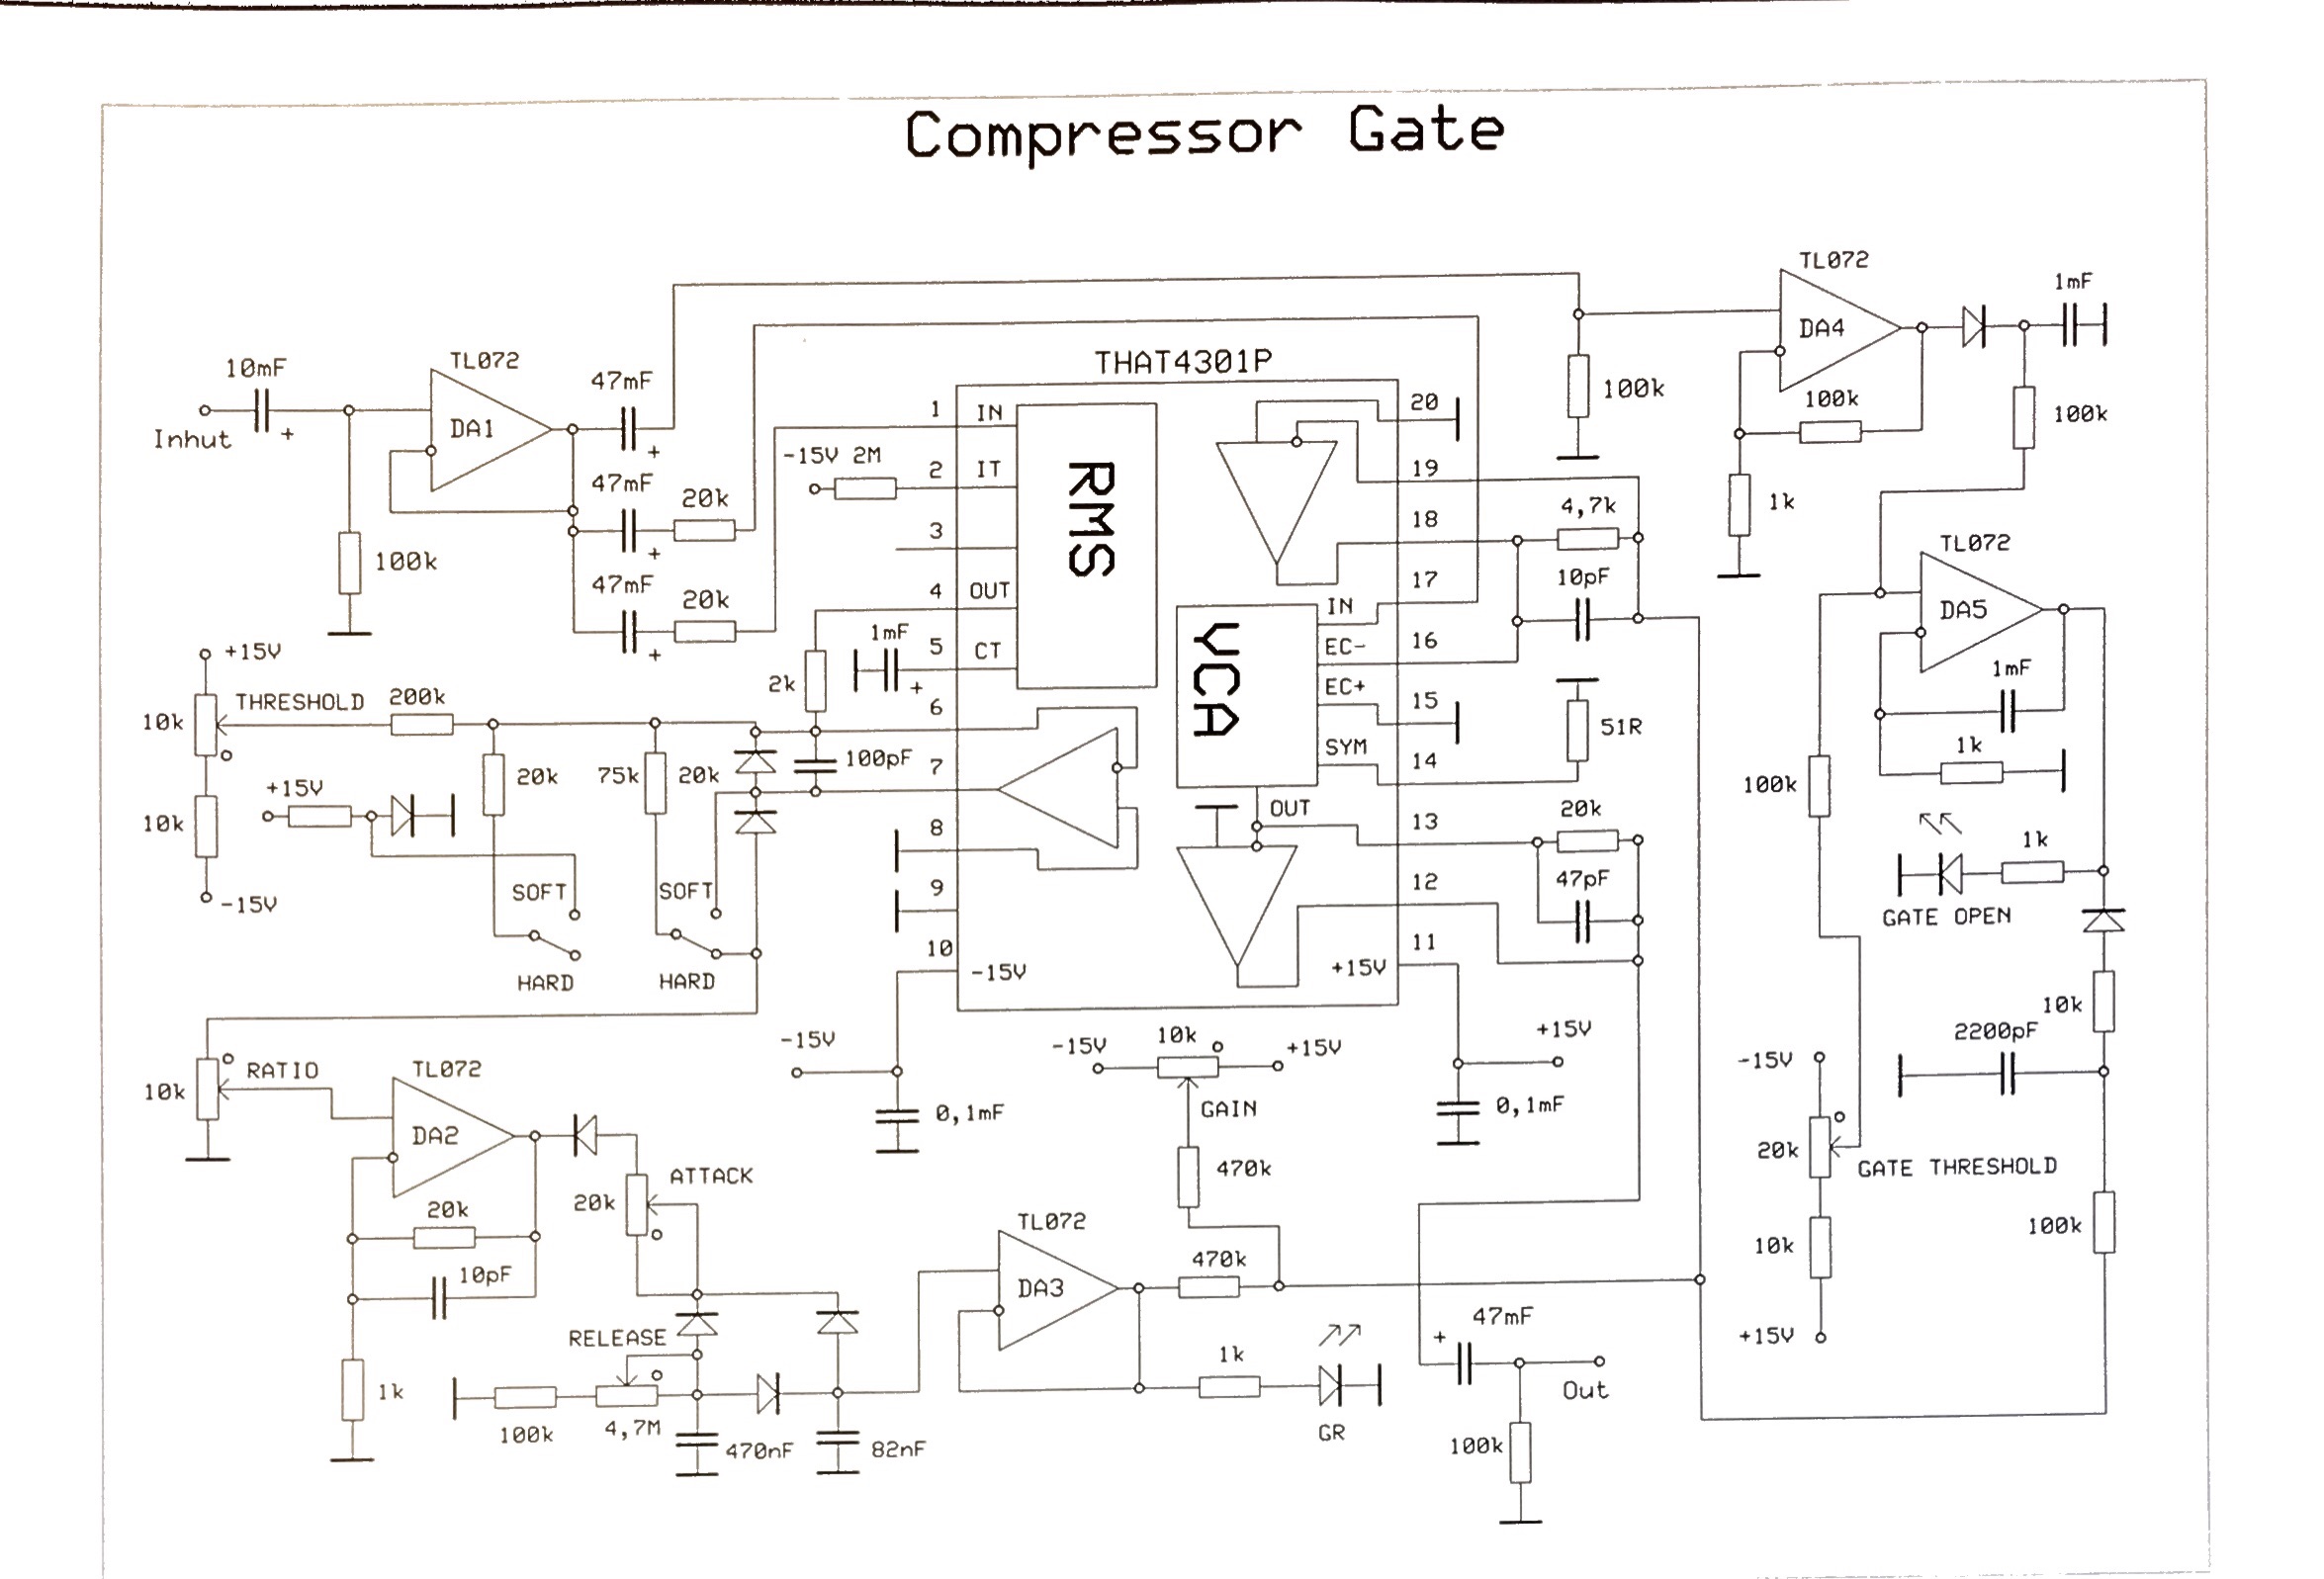 Hmk95aa компрессор схема